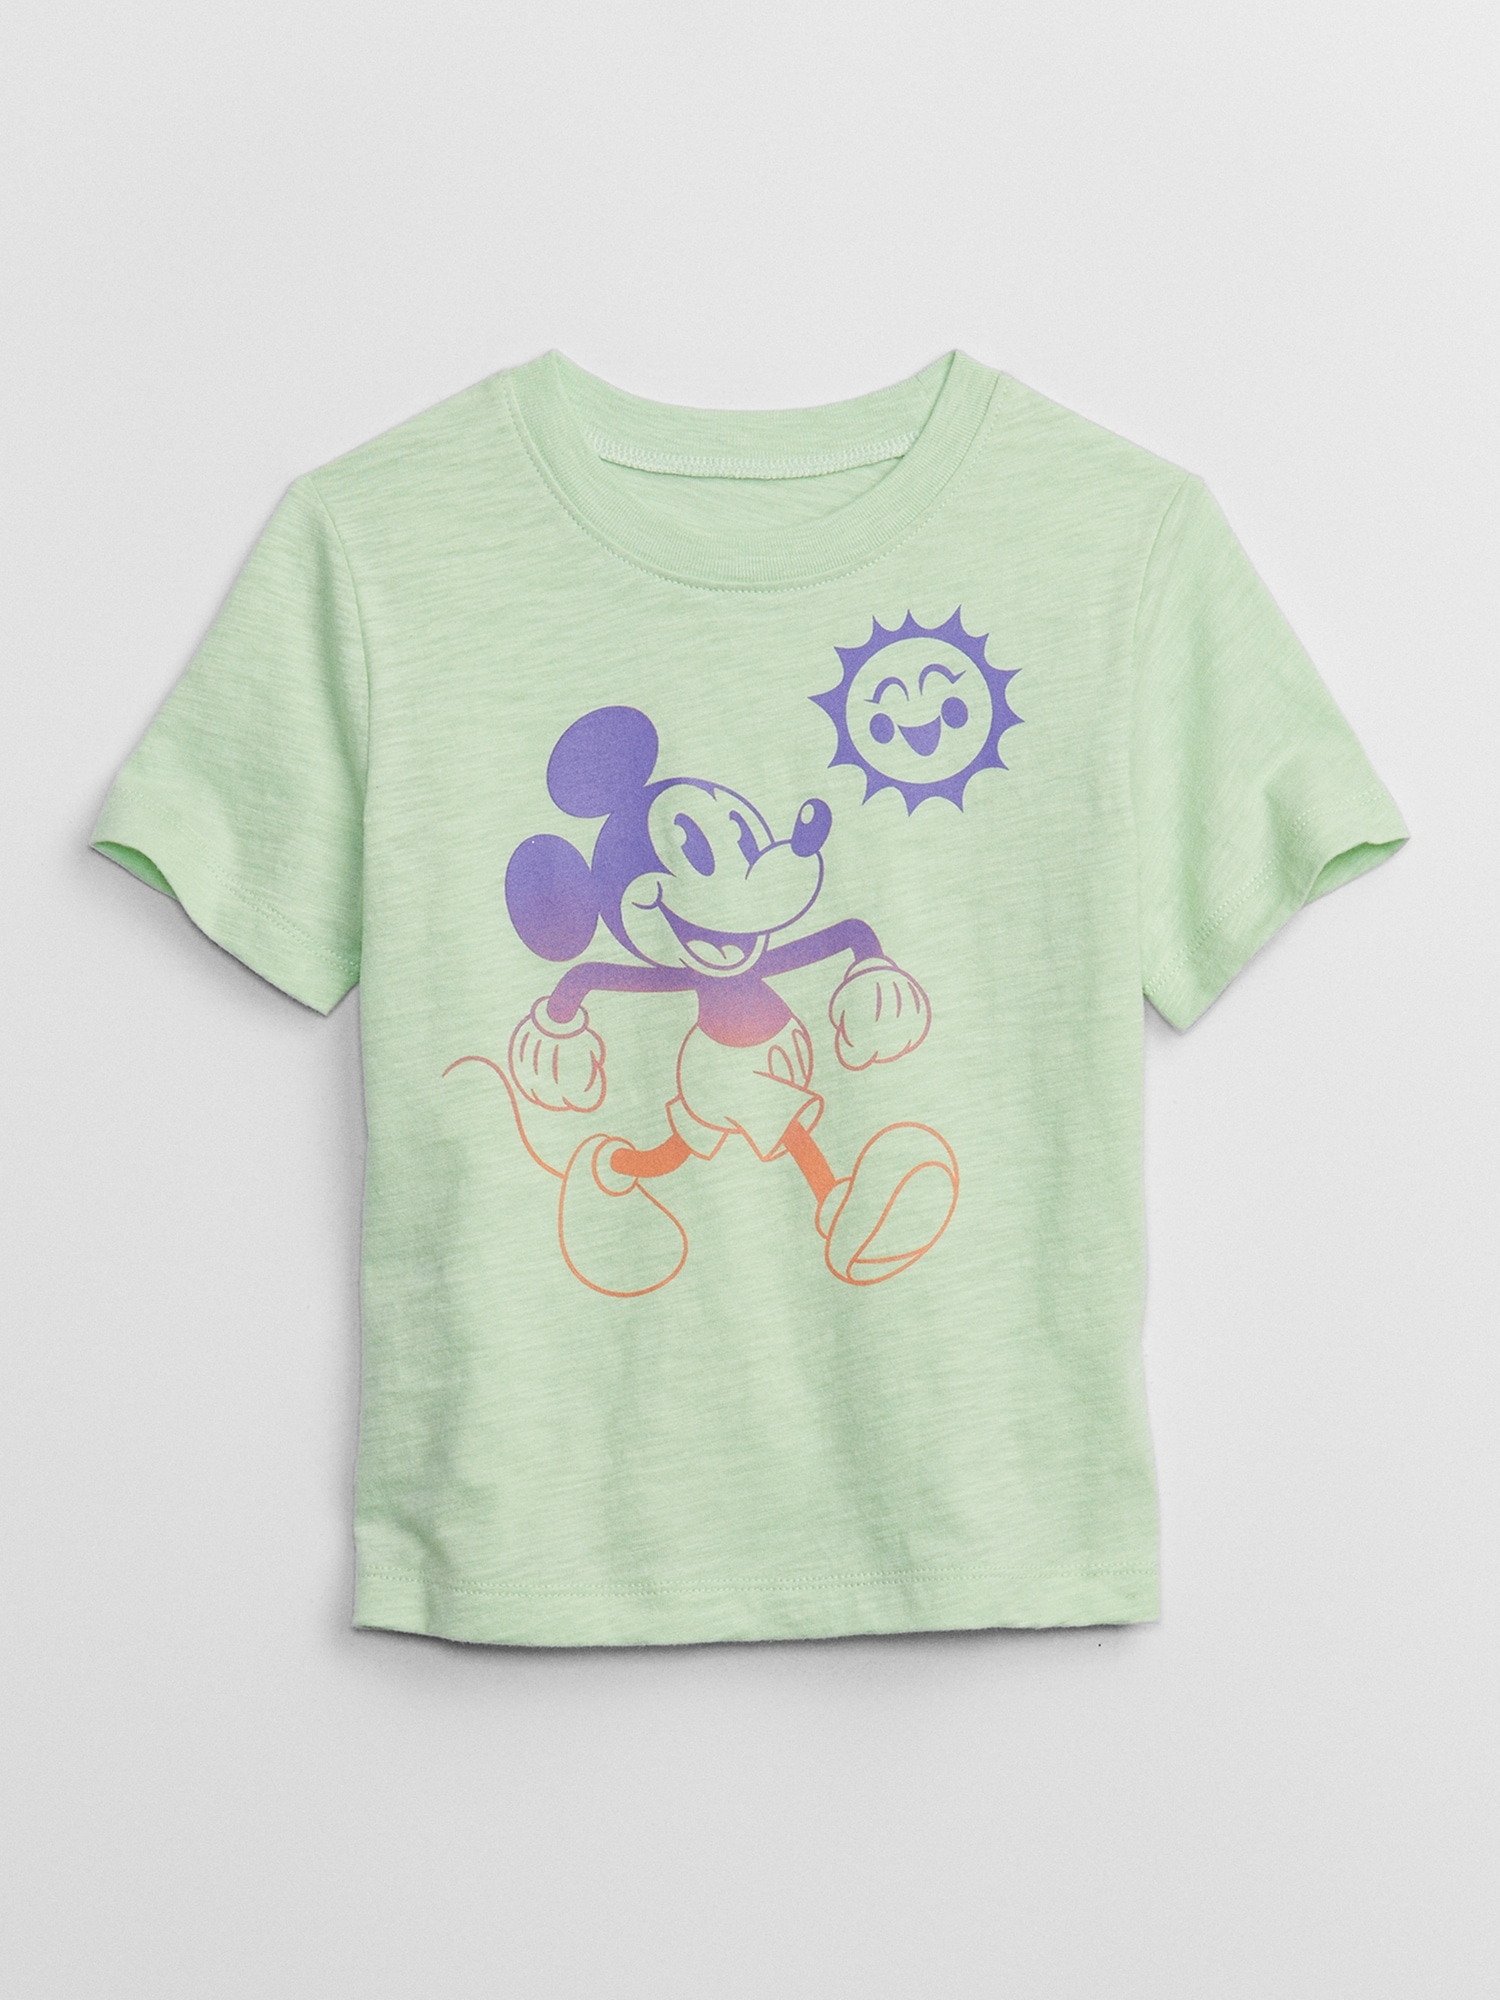 Mickey Mouse Shirts Gap | Factory